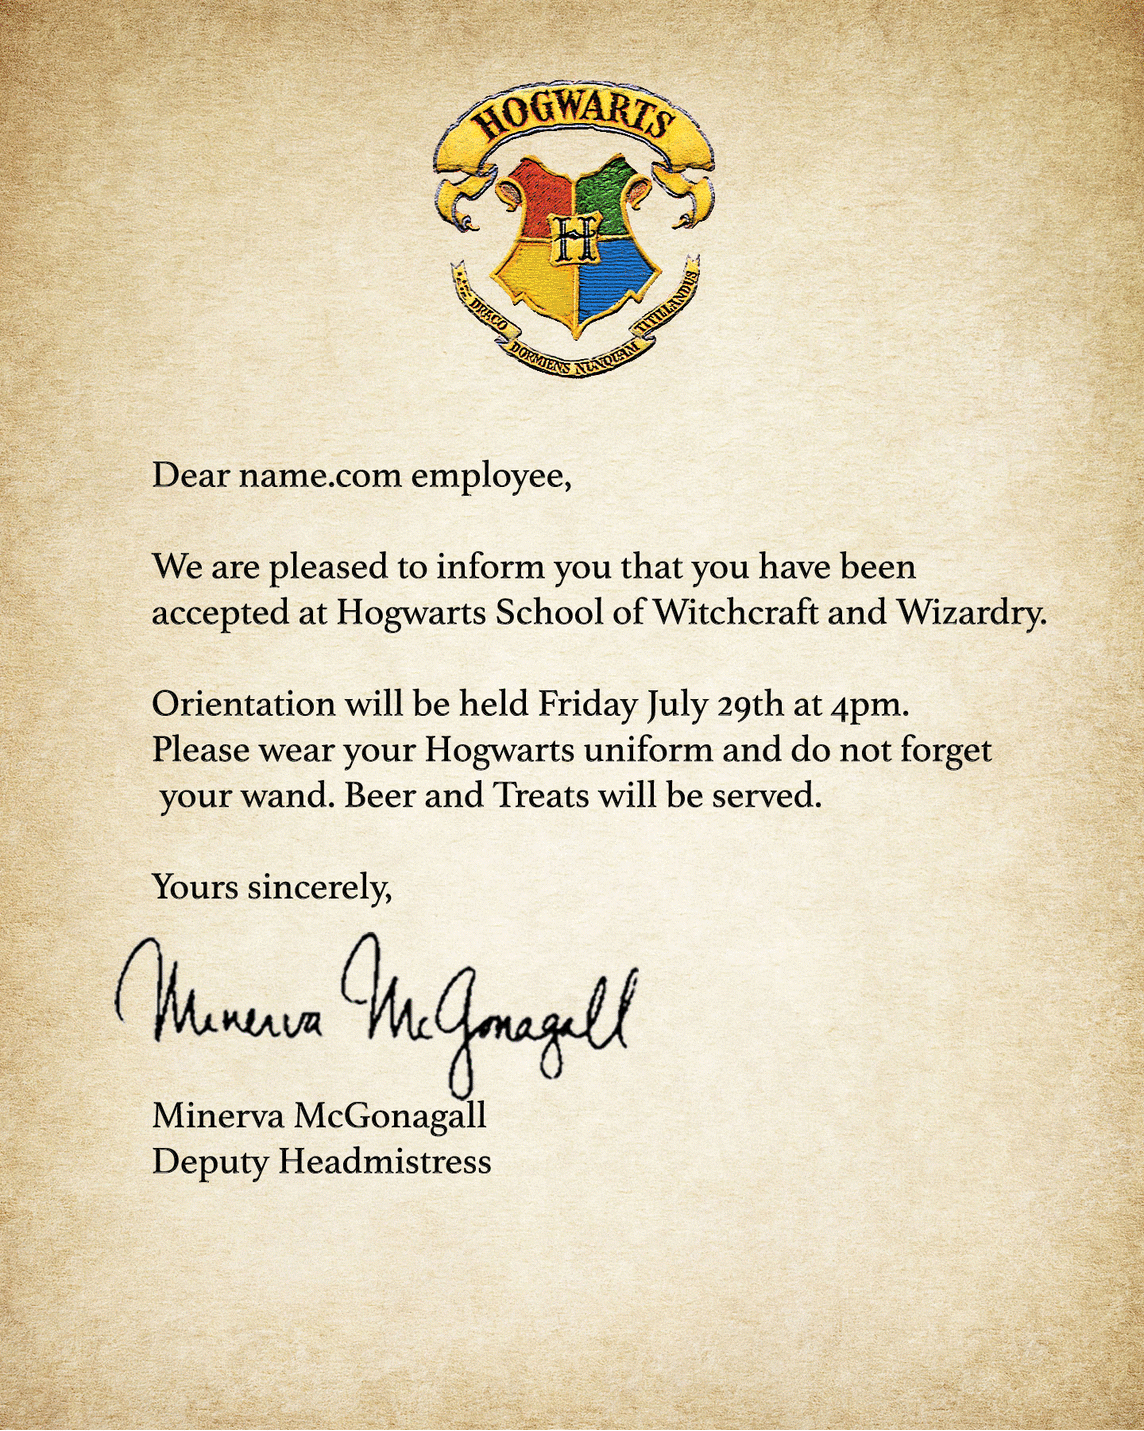 Harry Potter party invitation